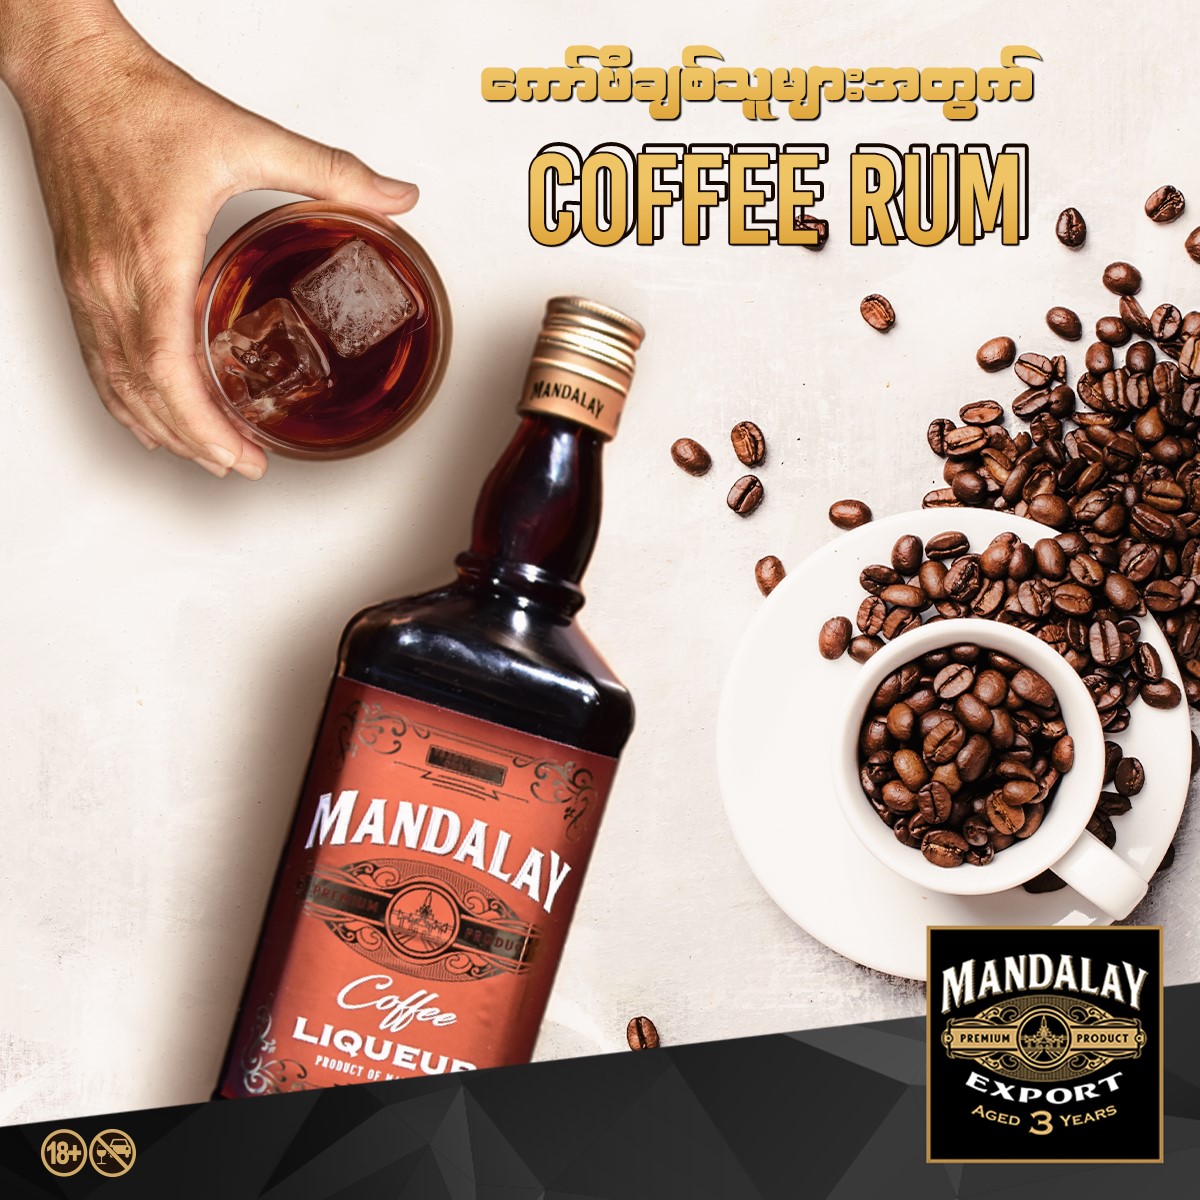 The Mandalay Coffee Liqueur